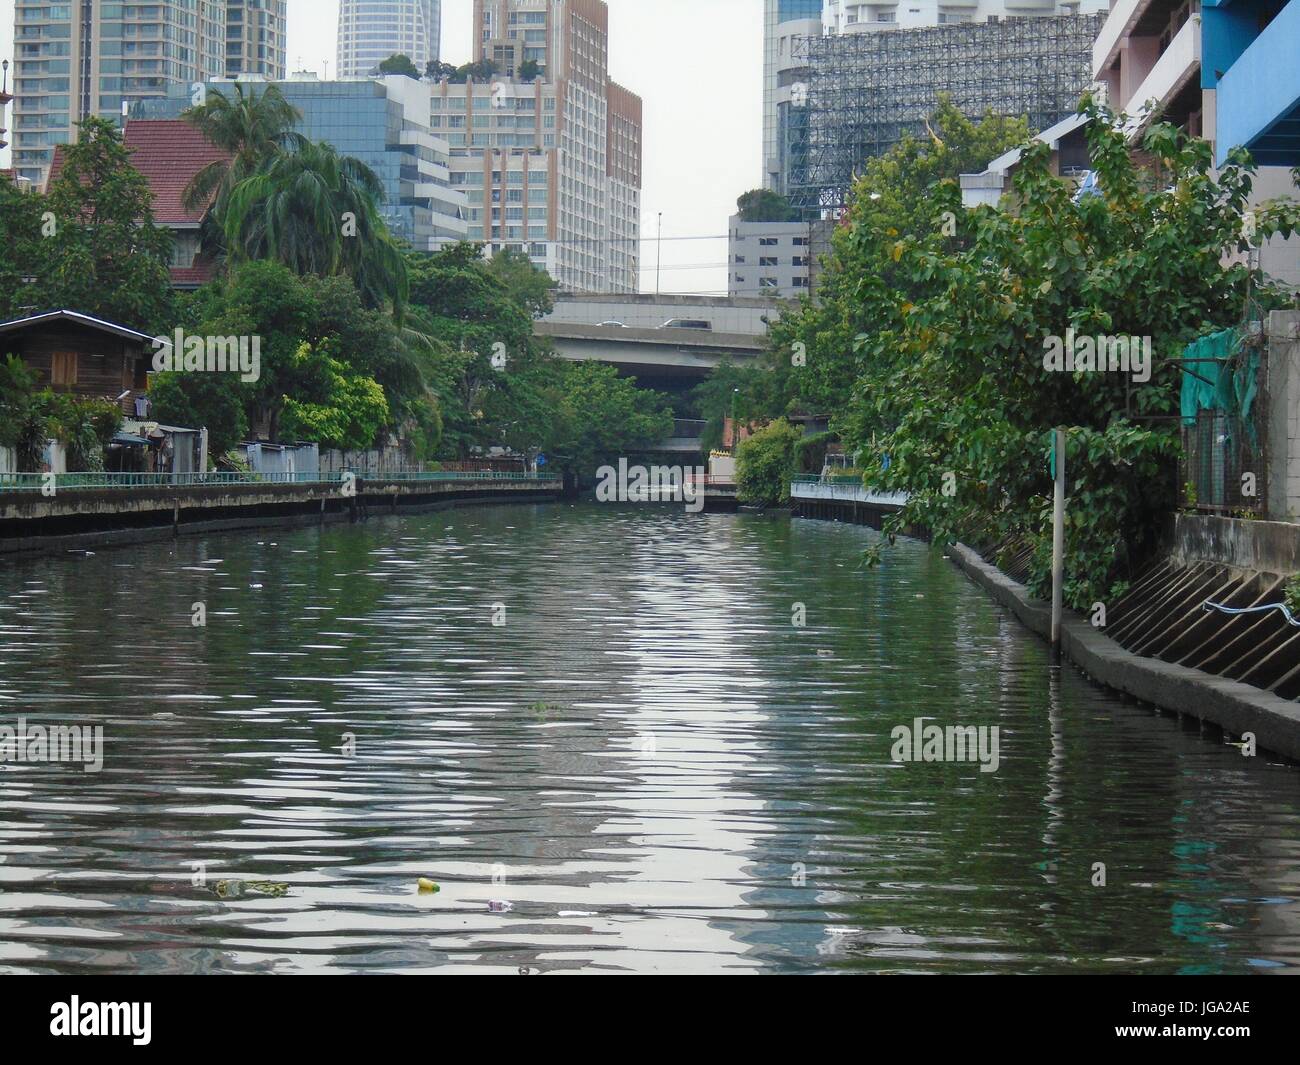 Venezia di Asia Khlong Saen Saep canale navigabile Bangkok in Thailandia del sud-est asiatico Foto Stock